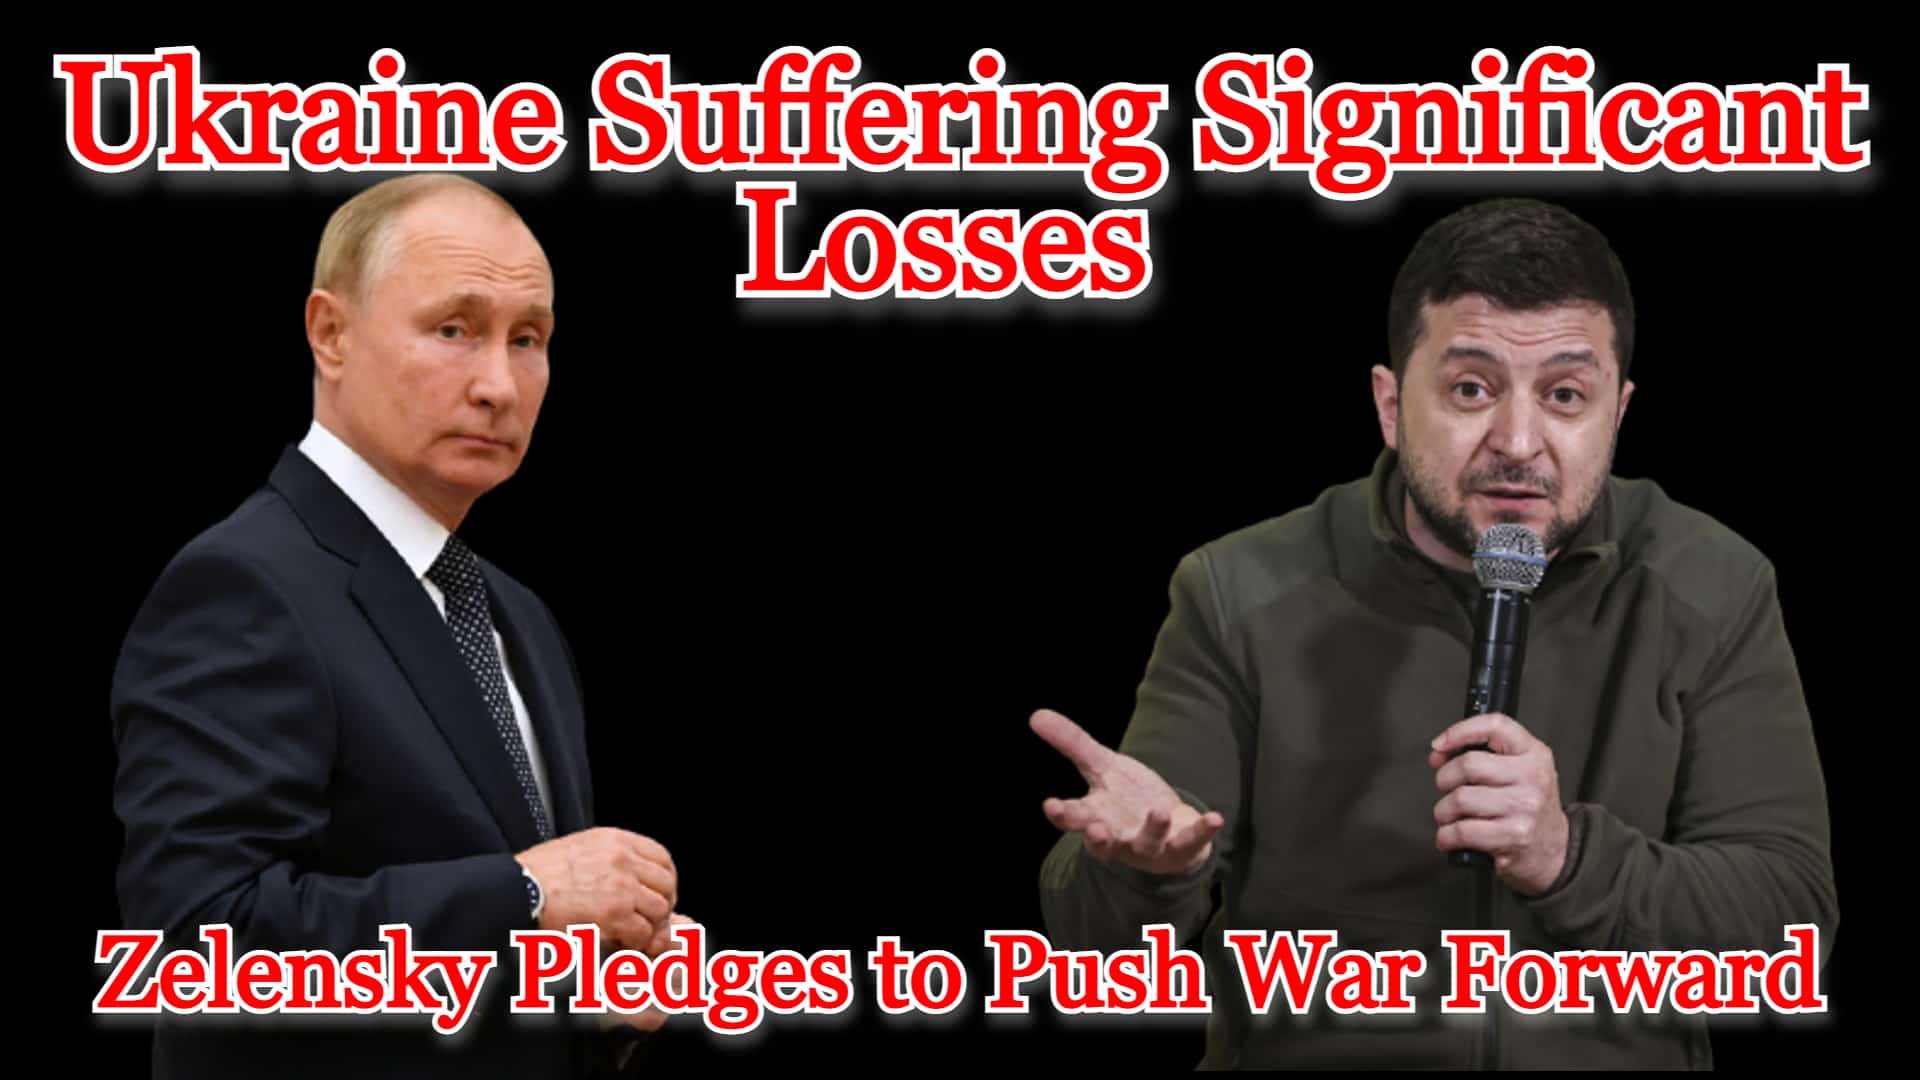 COI #289: Ukraine Suffering Significant Losses, Zelensky Pledges to Push War Forward